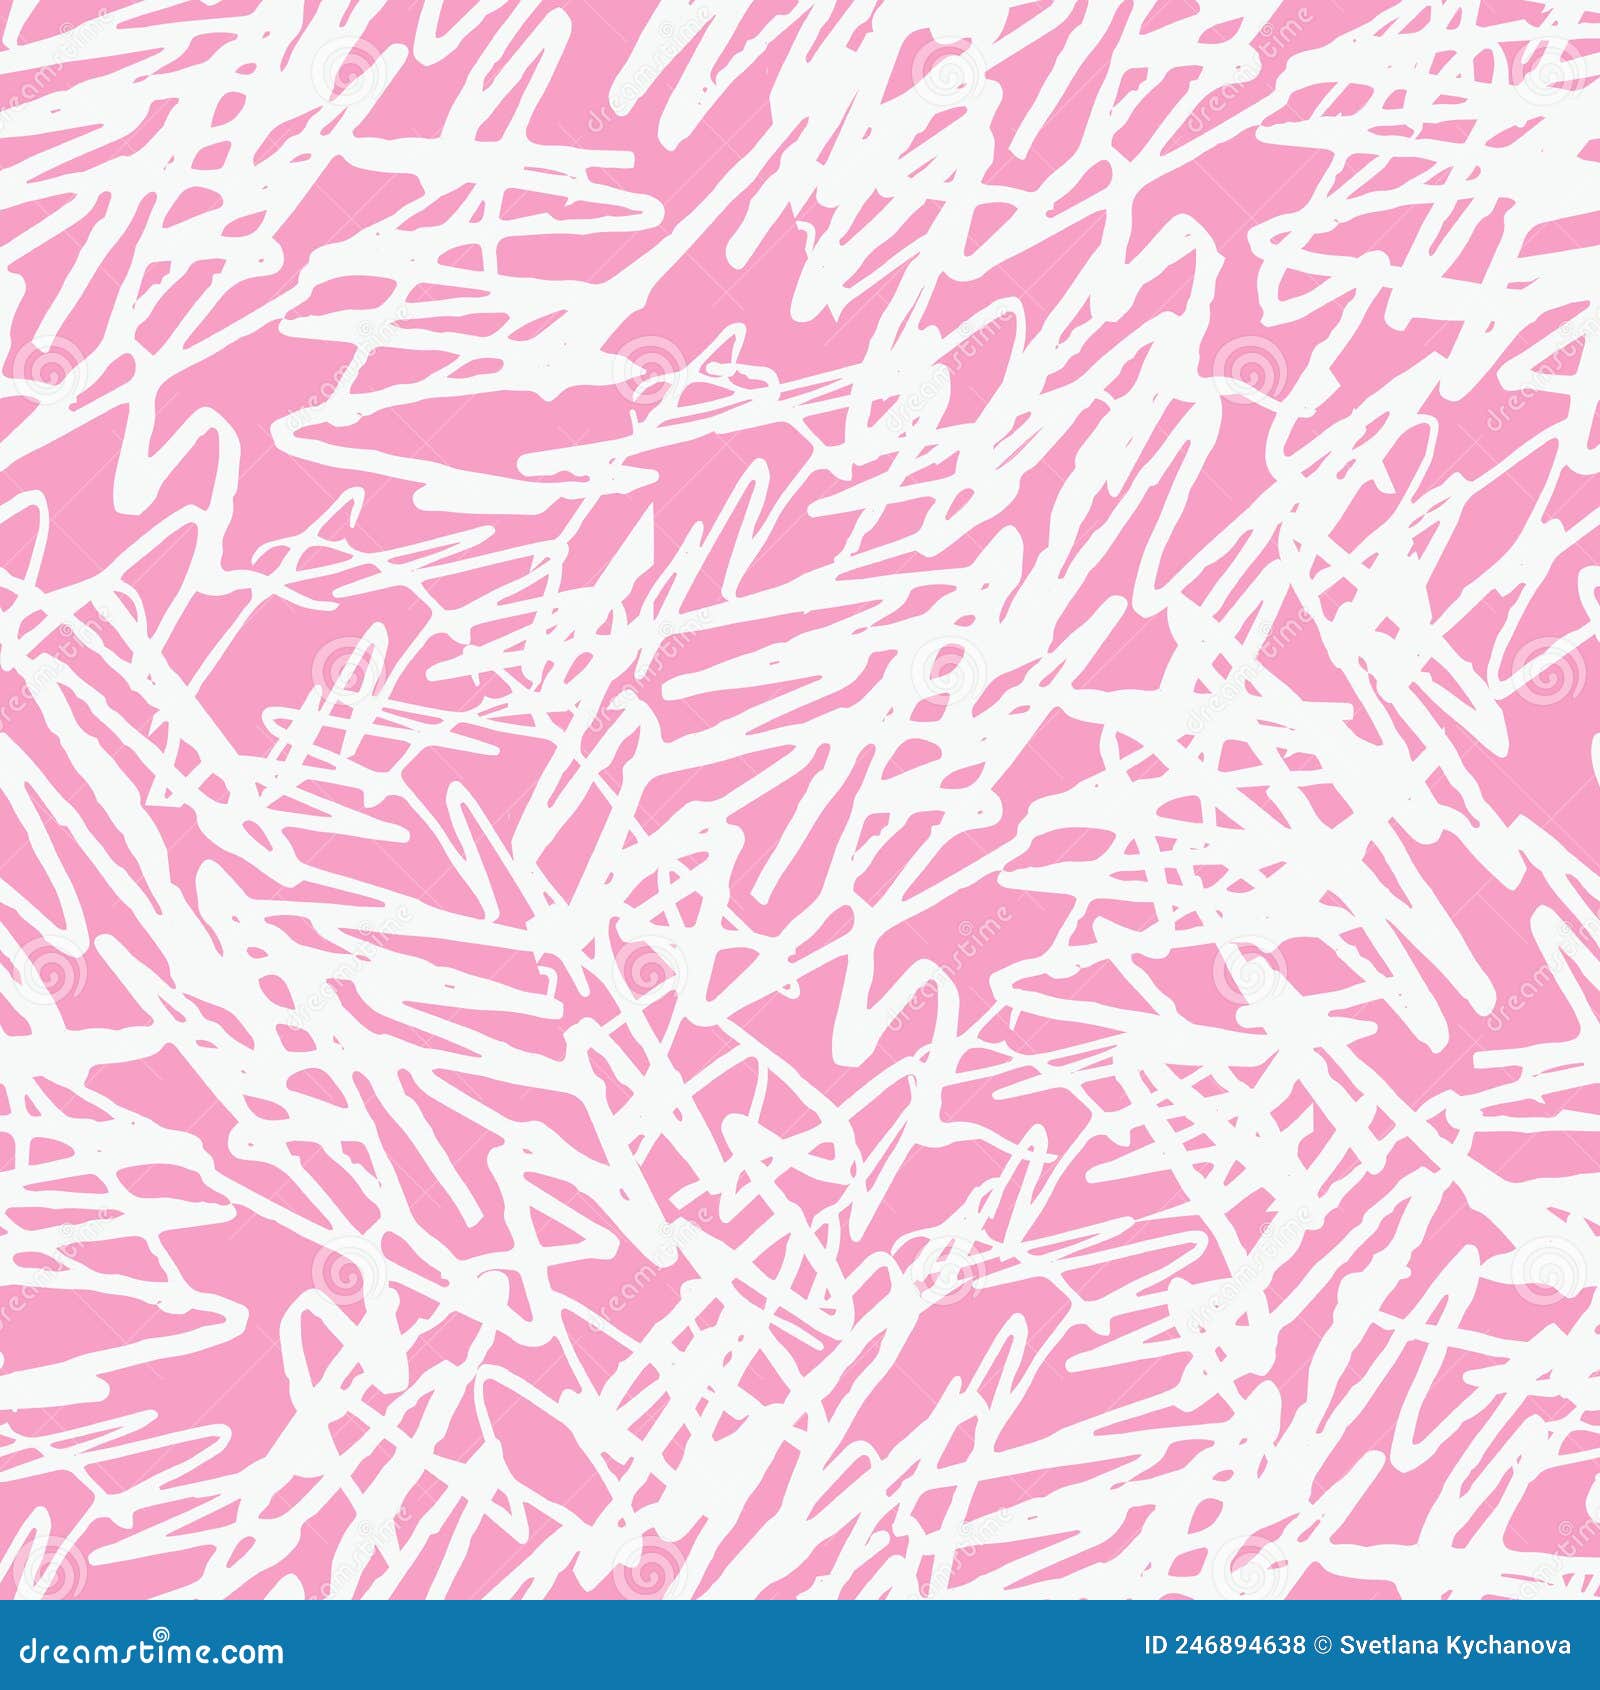 fondo abstracto de rayas rosas con líneas 6177759 Foto de stock en Vecteezy